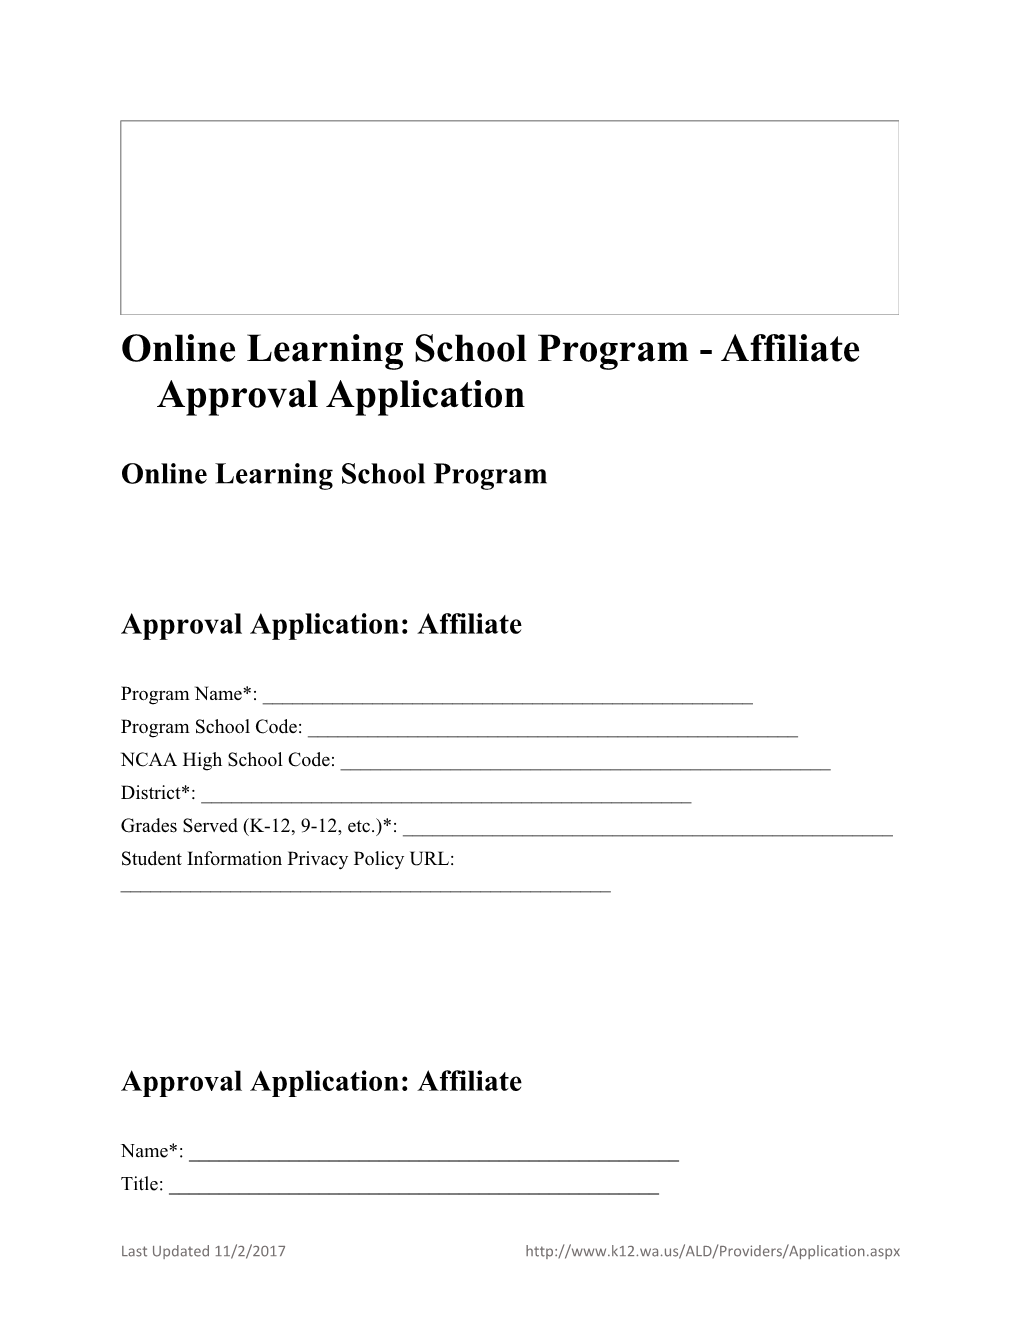 Online Learning School Program - Affiliate Approval Application